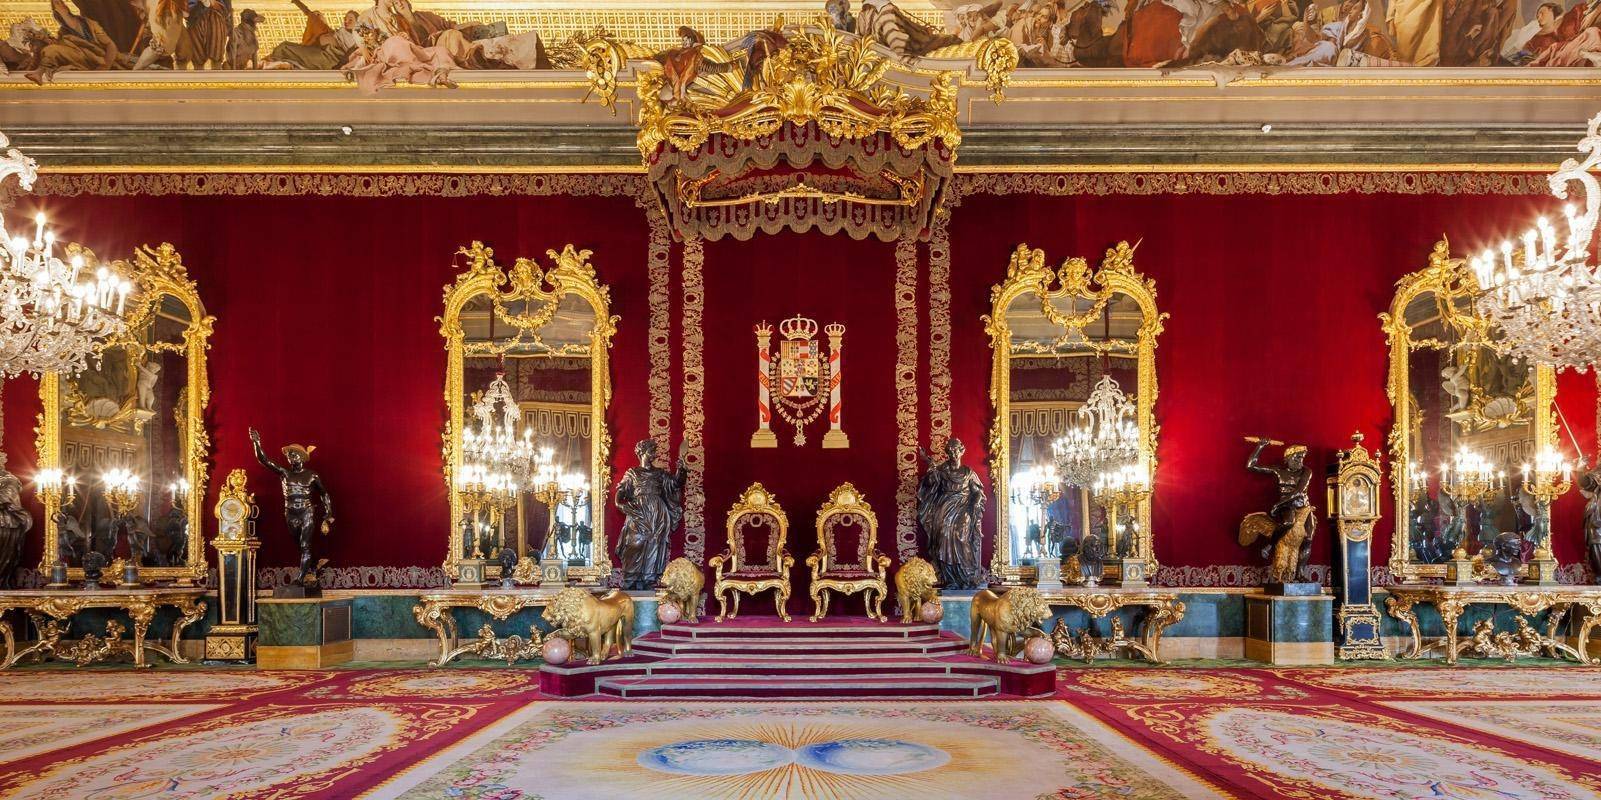 palace)是西班牙皇室的官方驻地,也是欧洲最大且仍在使用的皇家宫殿